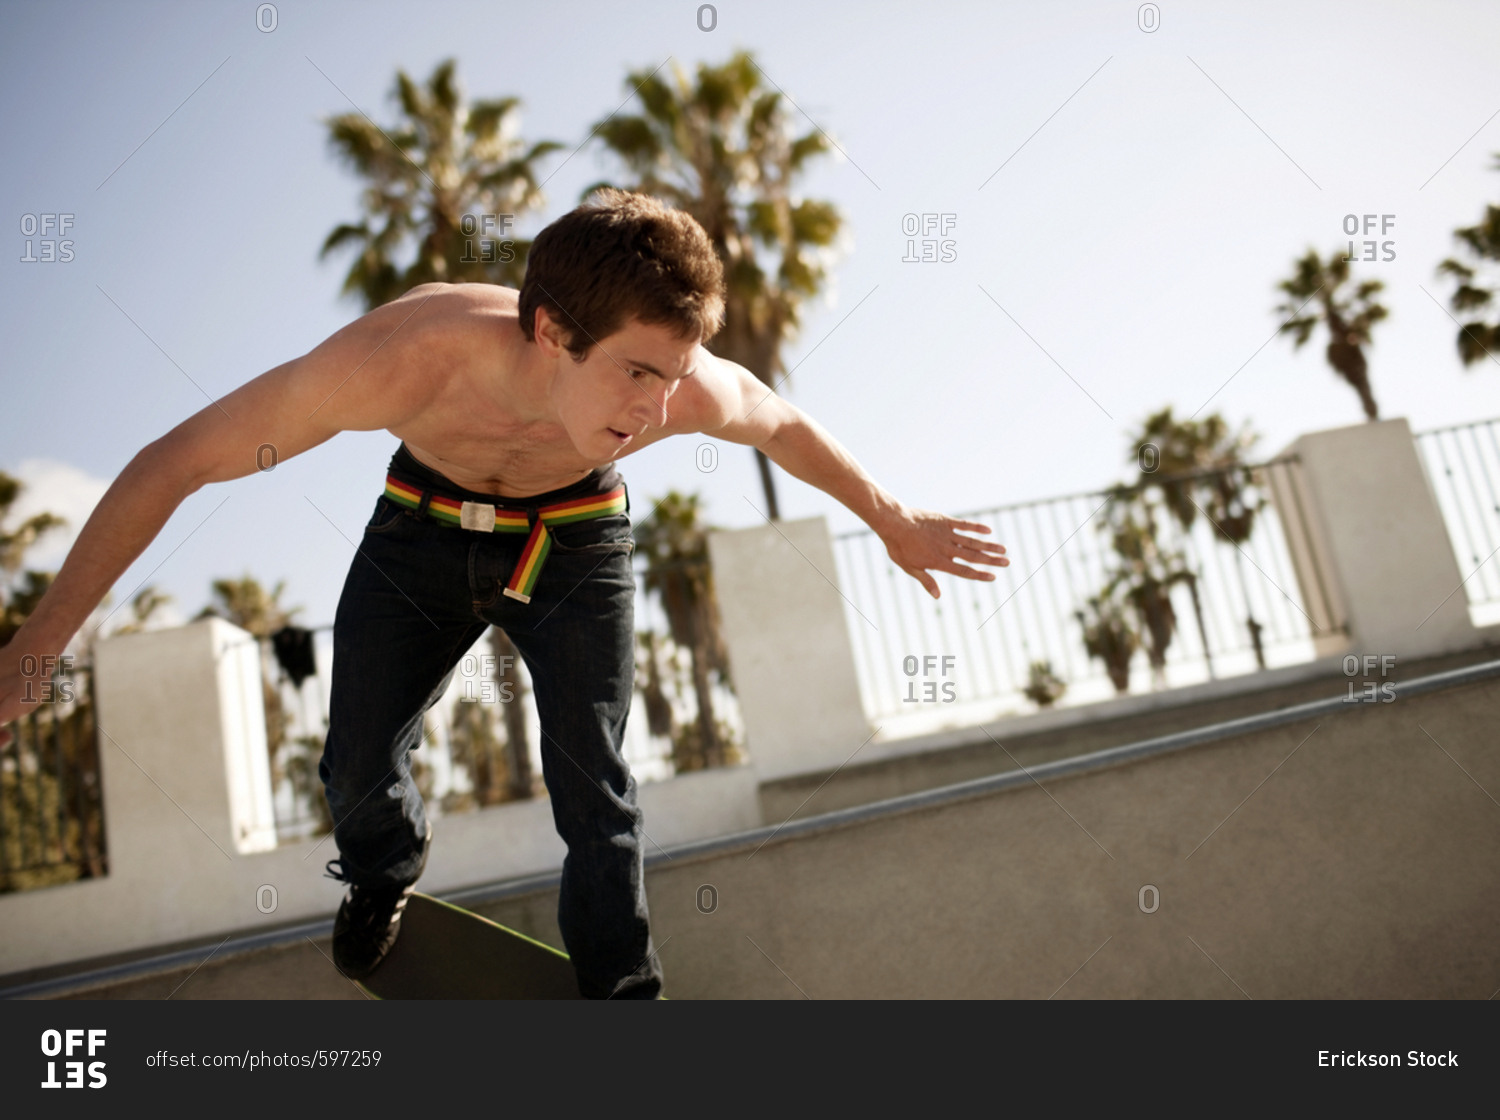 A skateboarder on a skateboard ramp